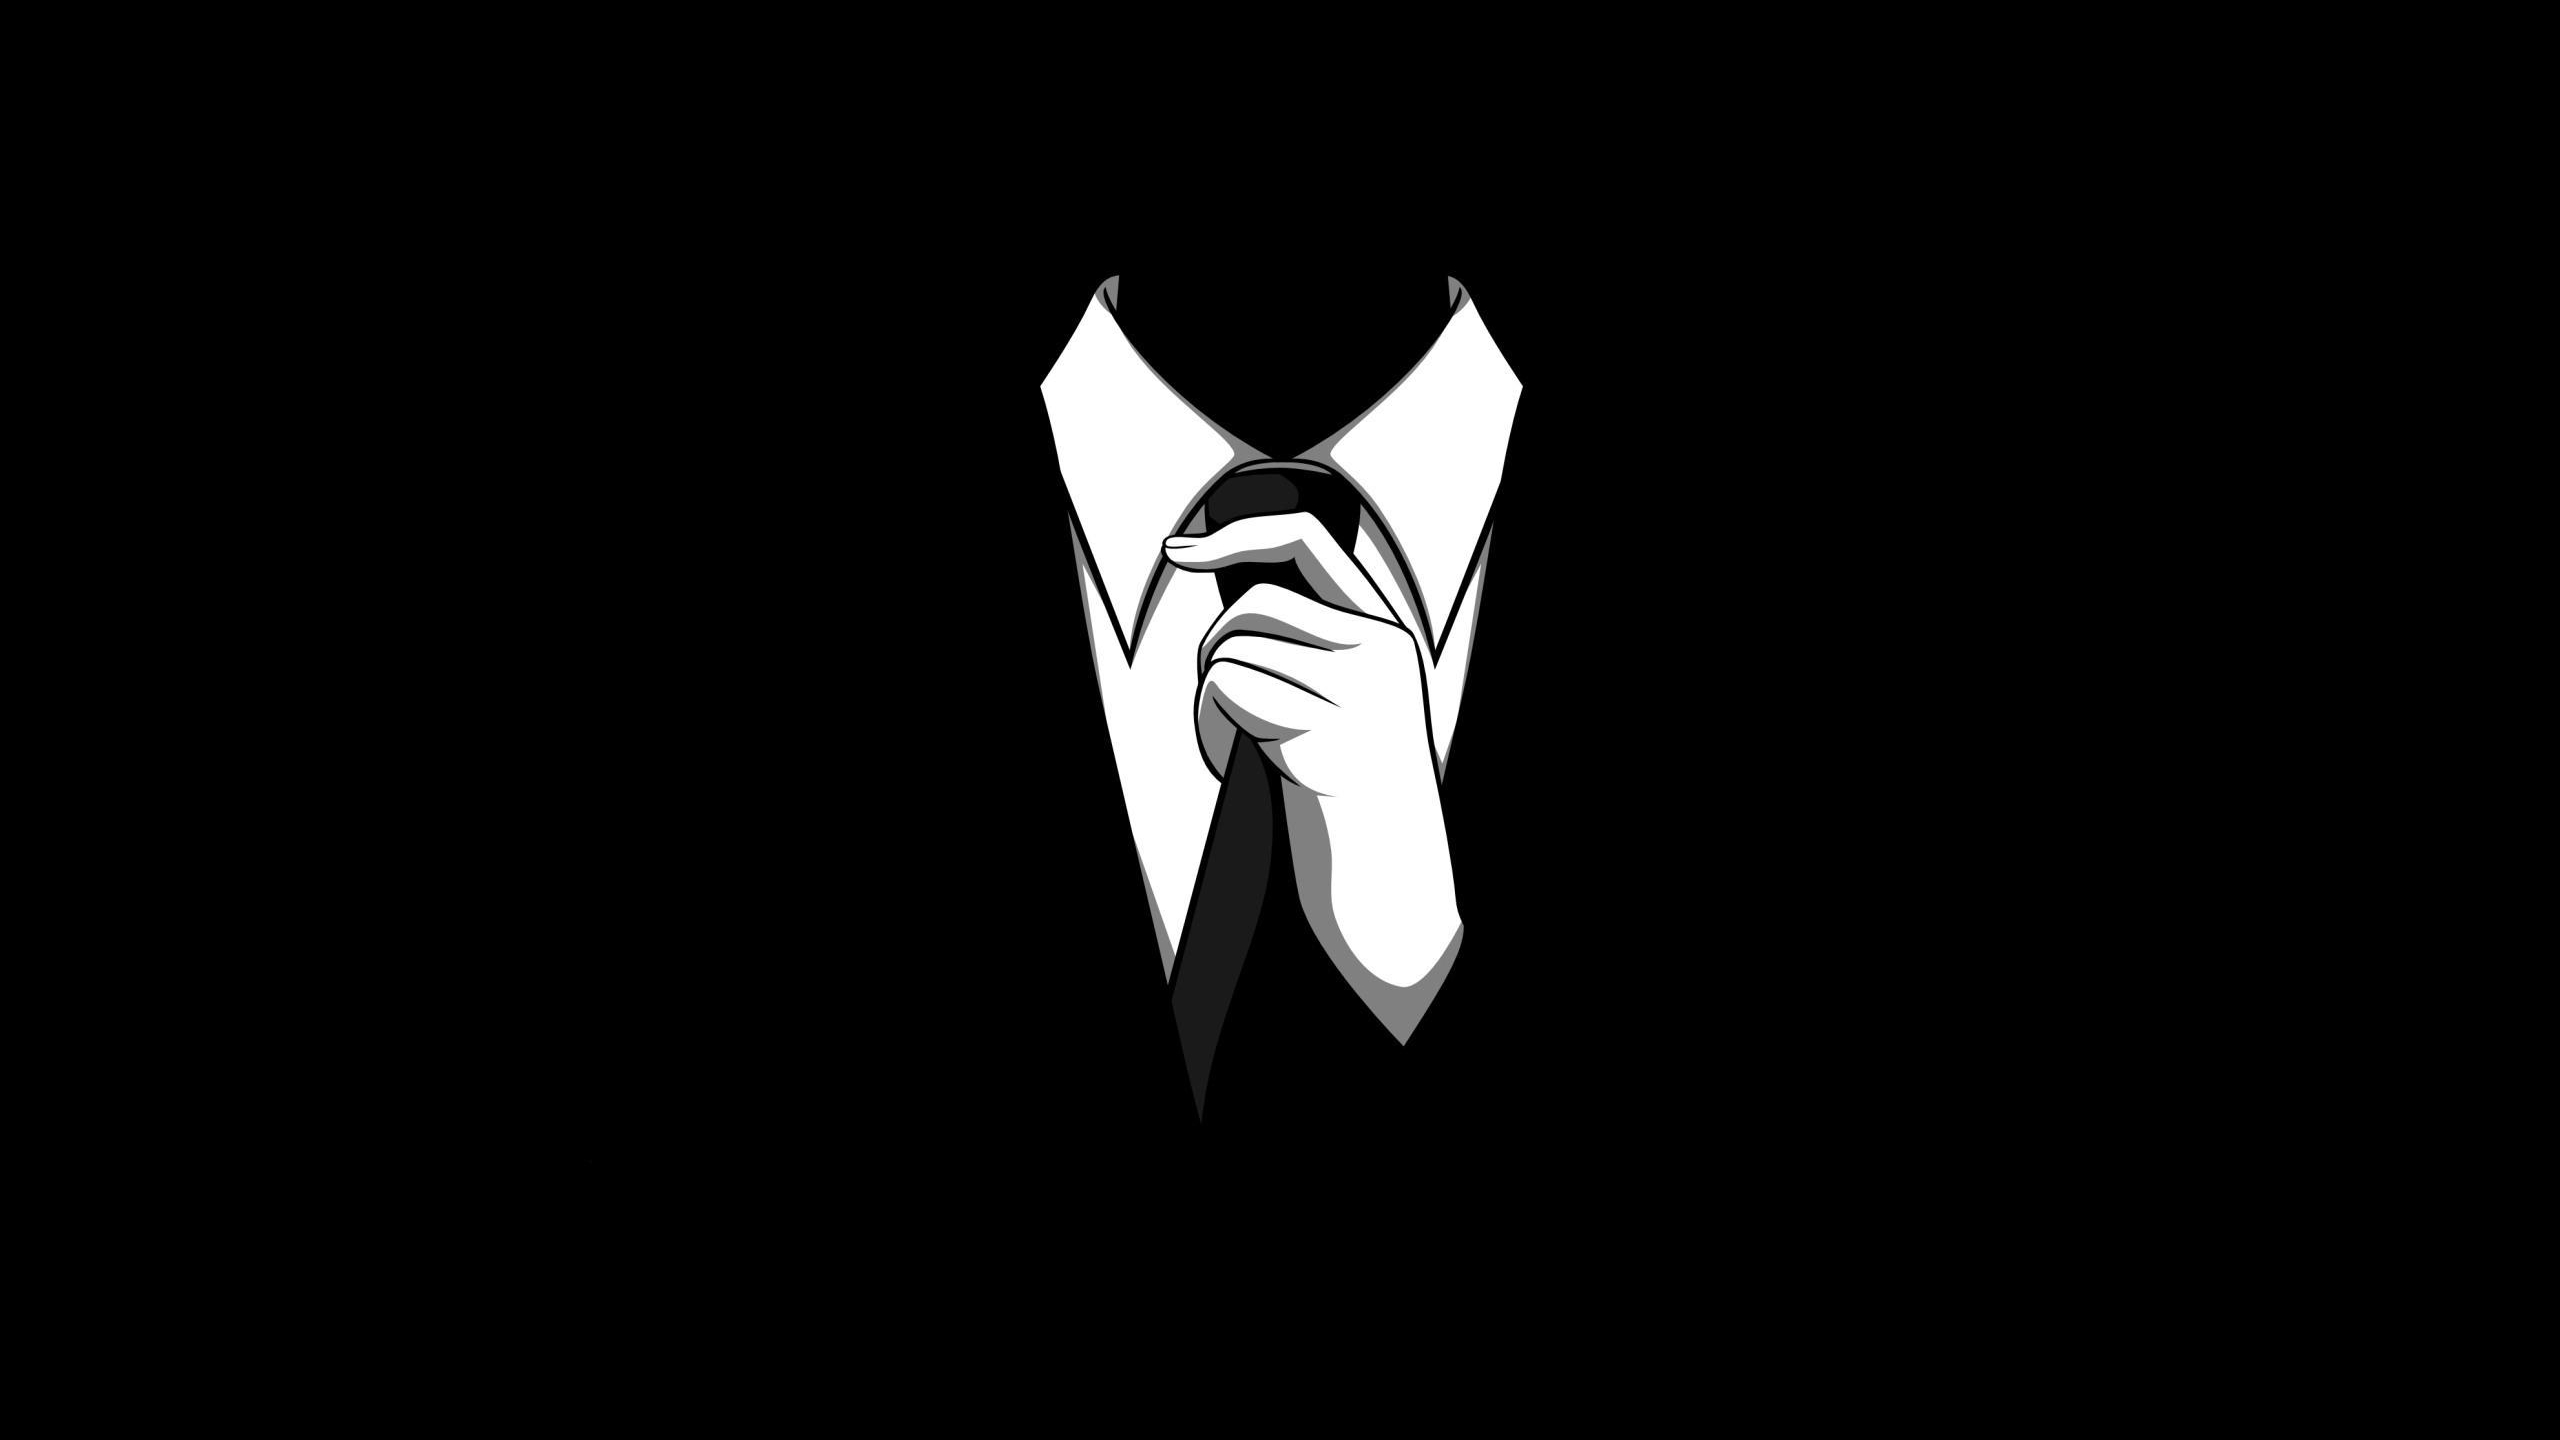 Anonymous black tie monochrome black background wallpaper 2560x1440 2560x1440